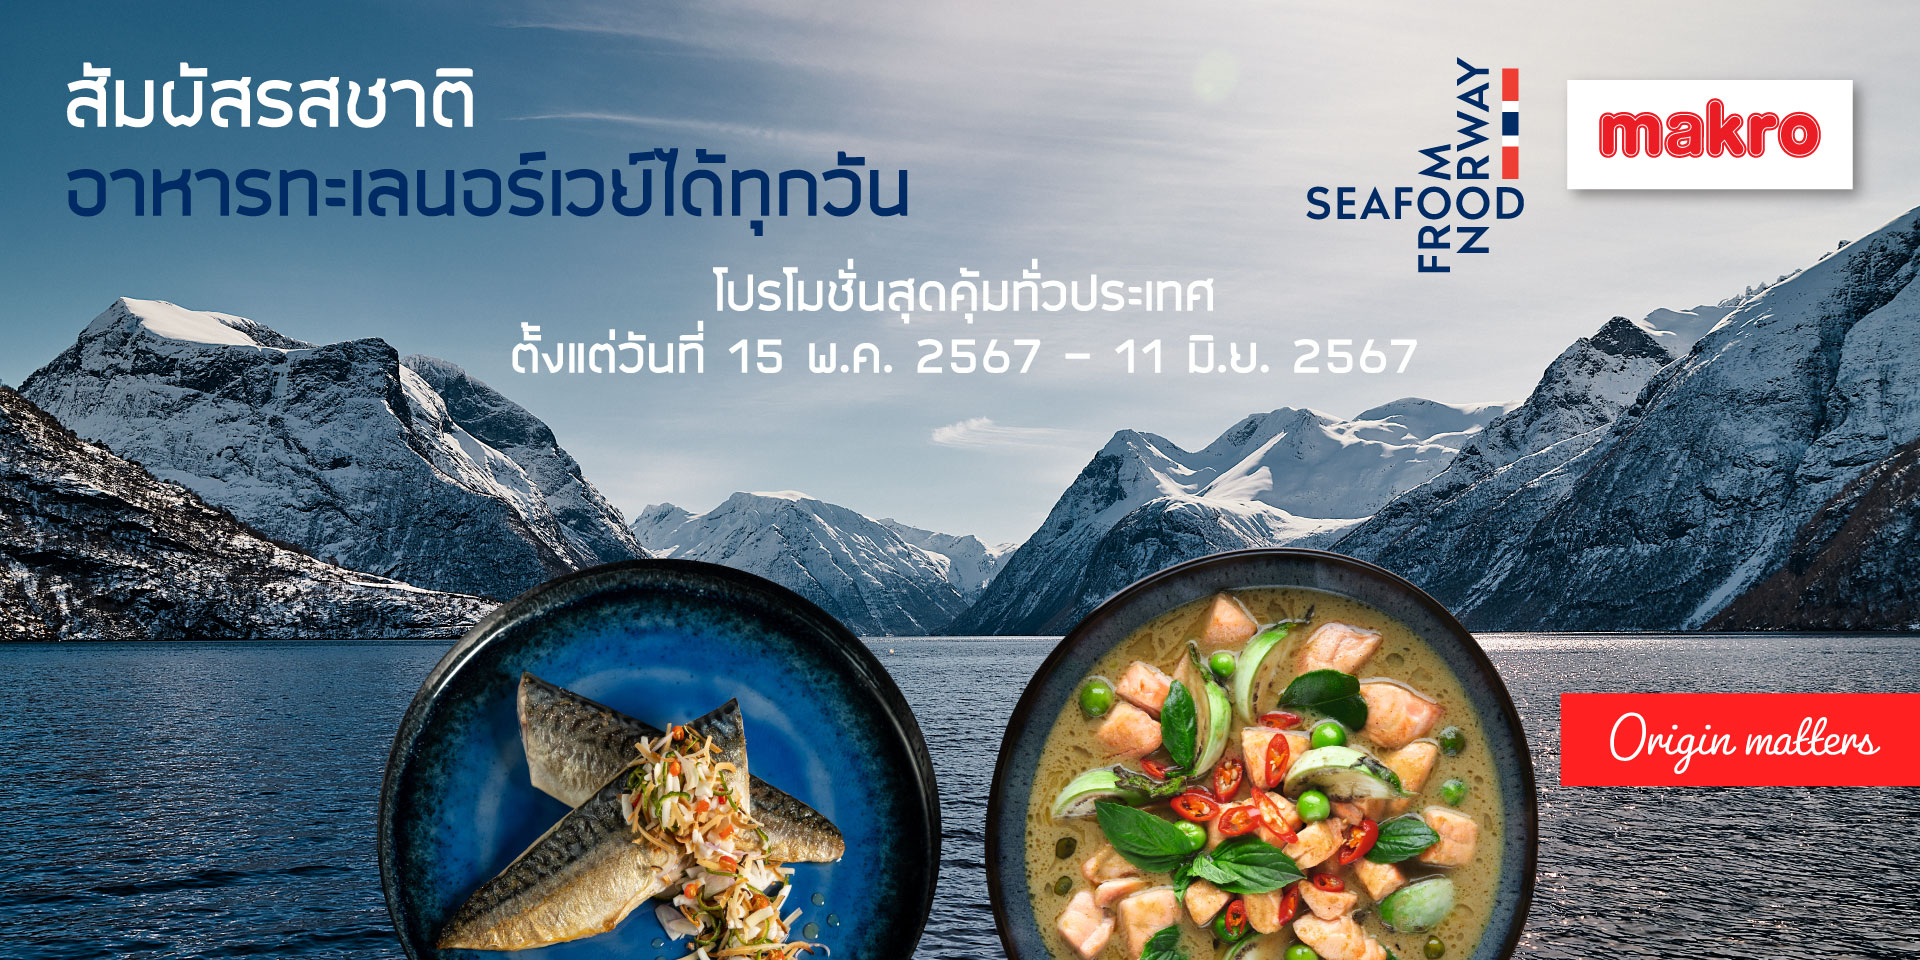 Seafood from Norway ส่งโปรโมชัน “สัมผัสรสชาติอาหารทะเลนอร์เวย์ได้ทุกวัน” ที่แม็คโครทุกสาขาทั่วประเทศ จนถึงวันที่ 11 มิถุนายน 2567 สำนักพิมพ์แม่บ้าน